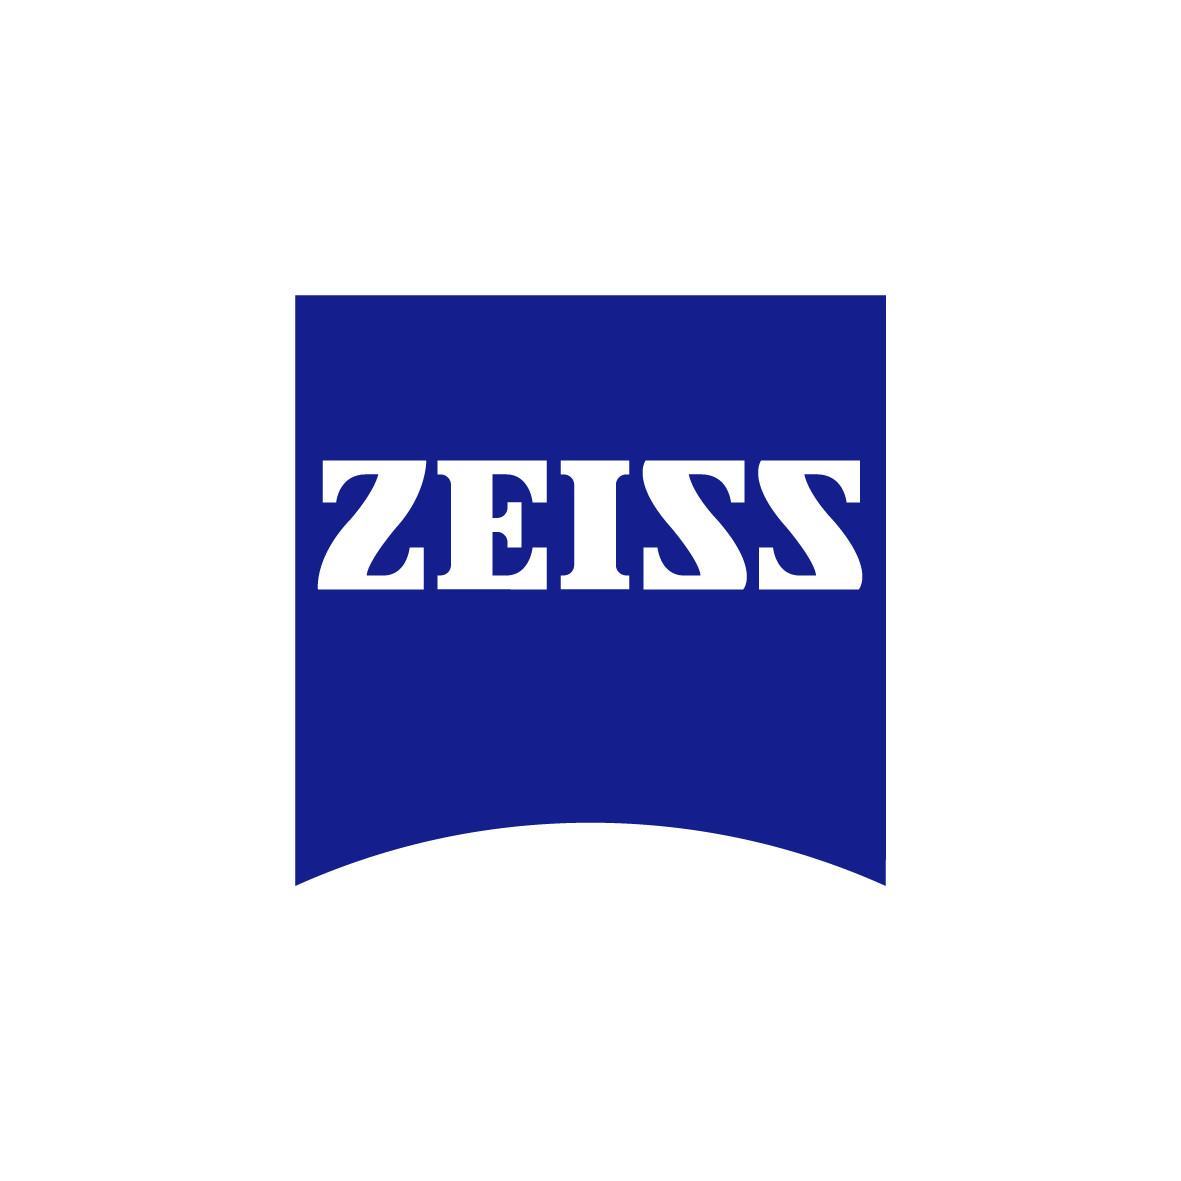 Zeiss – Store norske leksikon